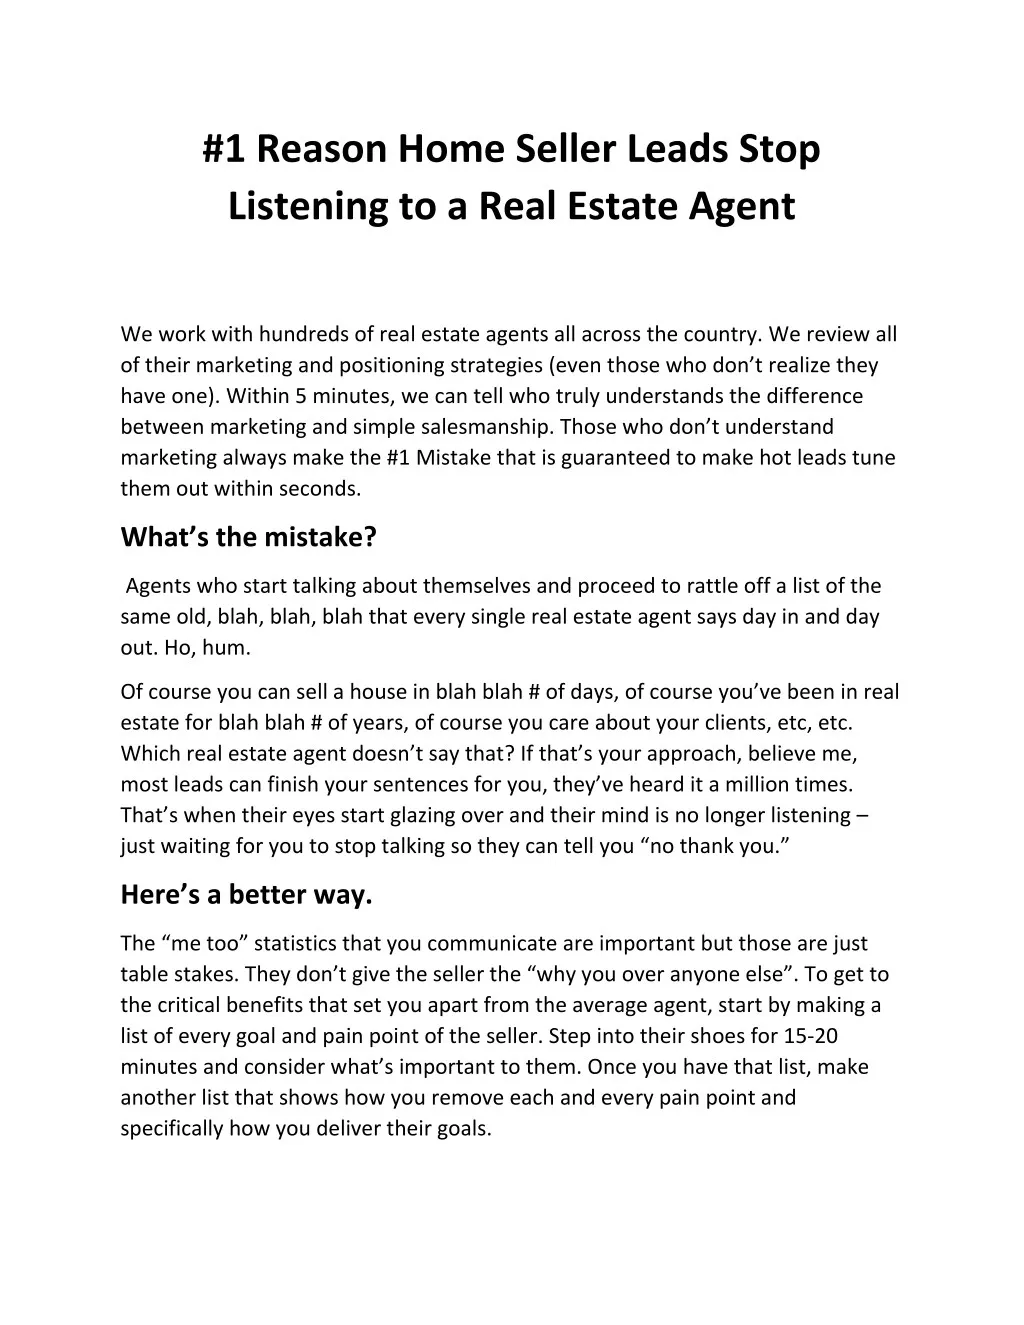 1 reason home seller leads stop listening